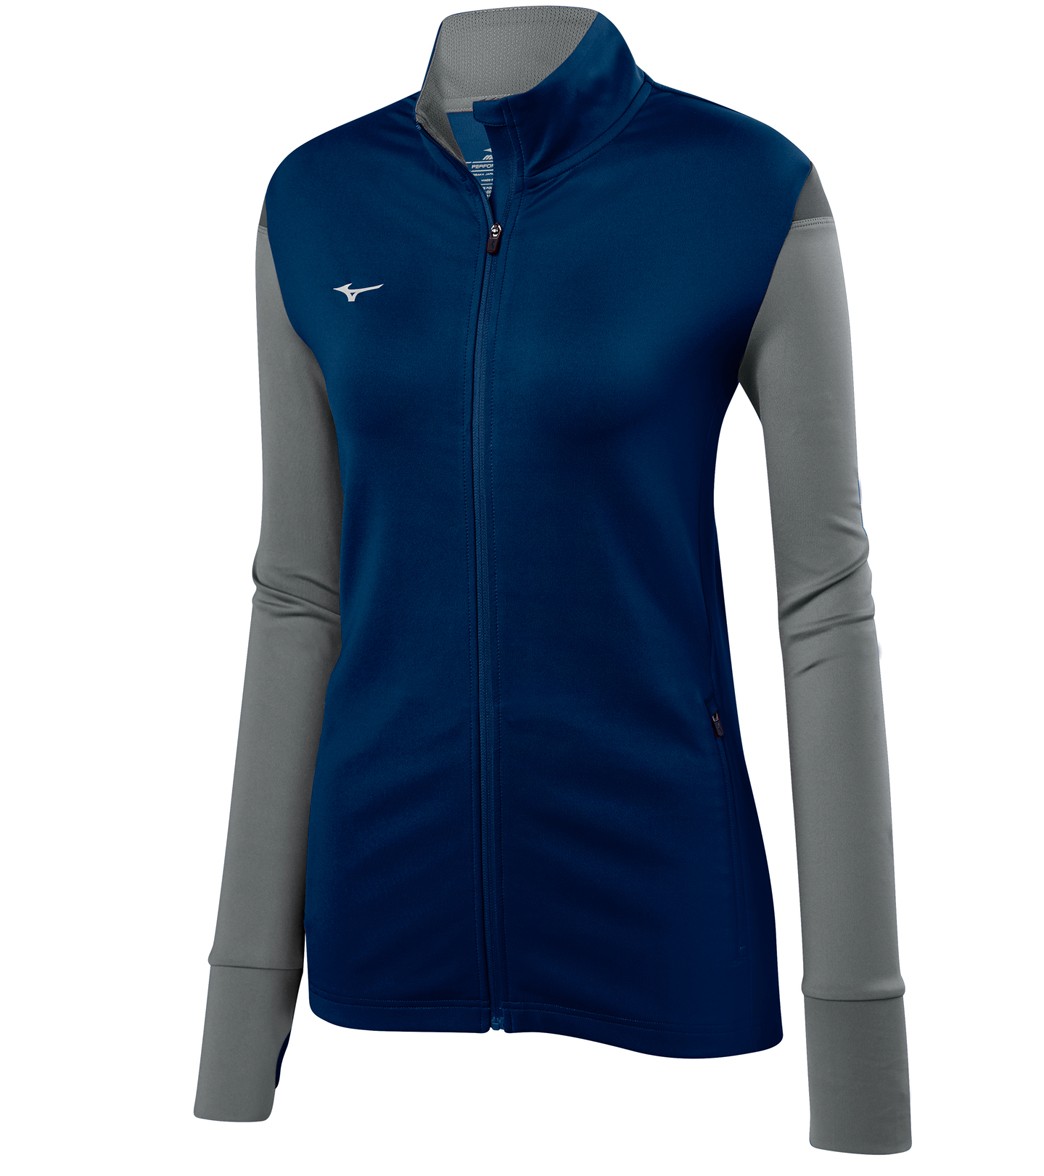 Mizuno Girls' Horizon Full Zip Volleyball Jacket - Navy/Grey/Charcoal Medium Cotton/Polyester - Swimoutlet.com